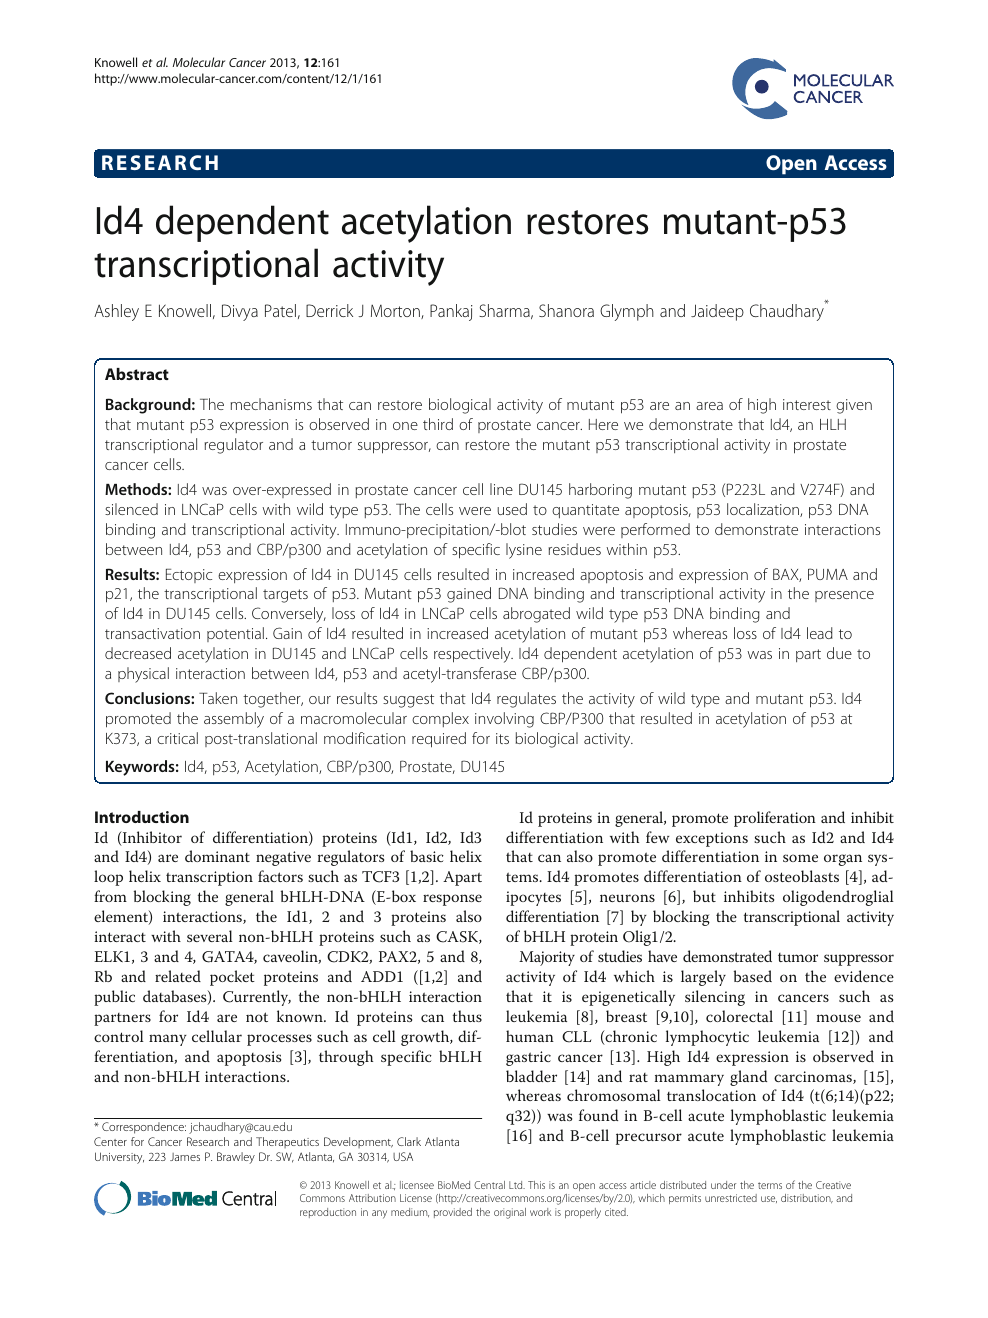 Id4 Dependent Acetylation Restores Mutant P53 Transcriptional